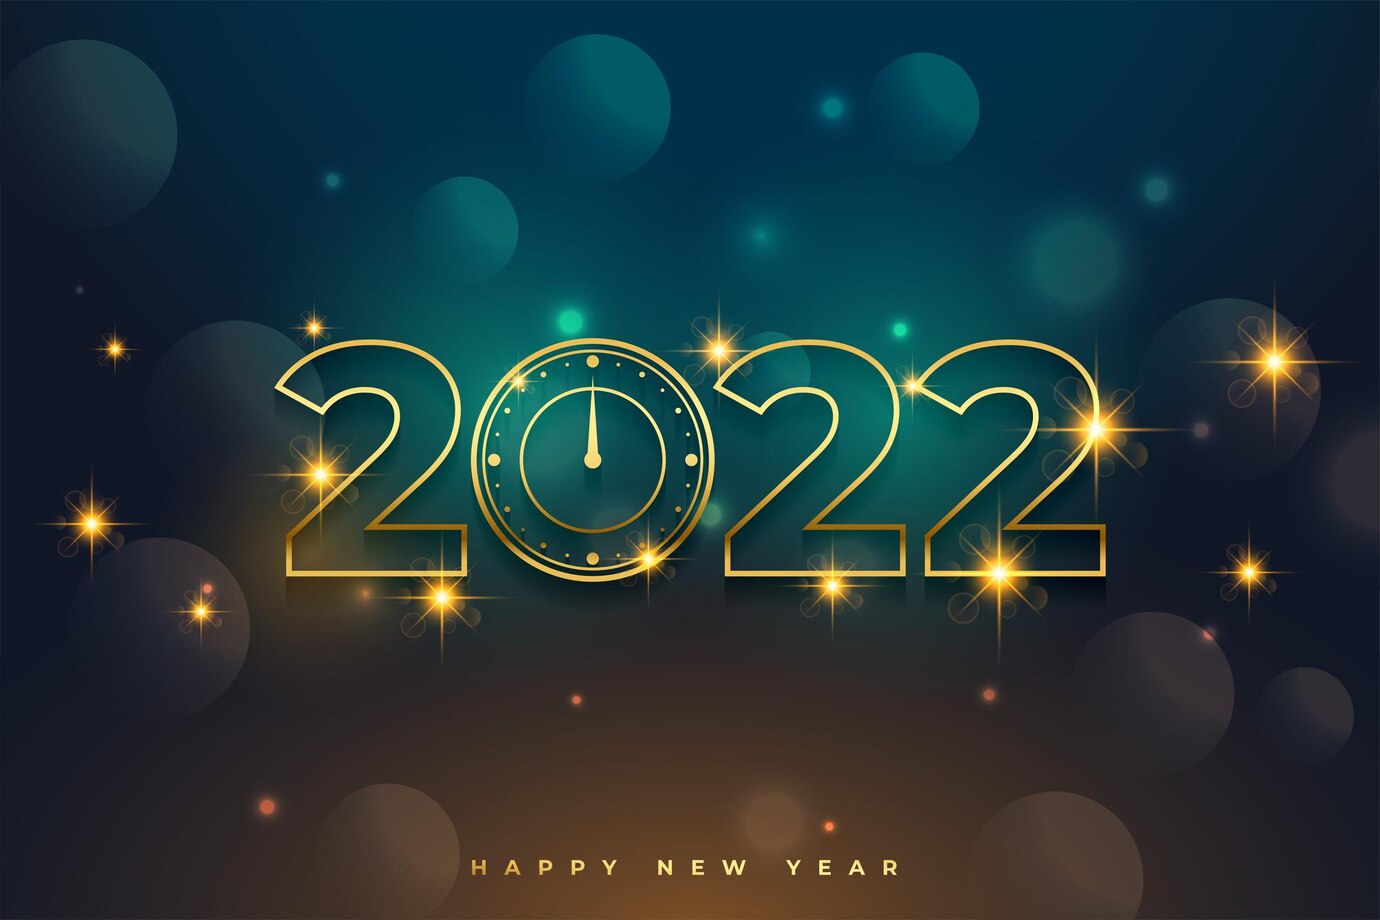 images/shiny-sparkling-happy-new-year-2022-background_1017-35717.jpg